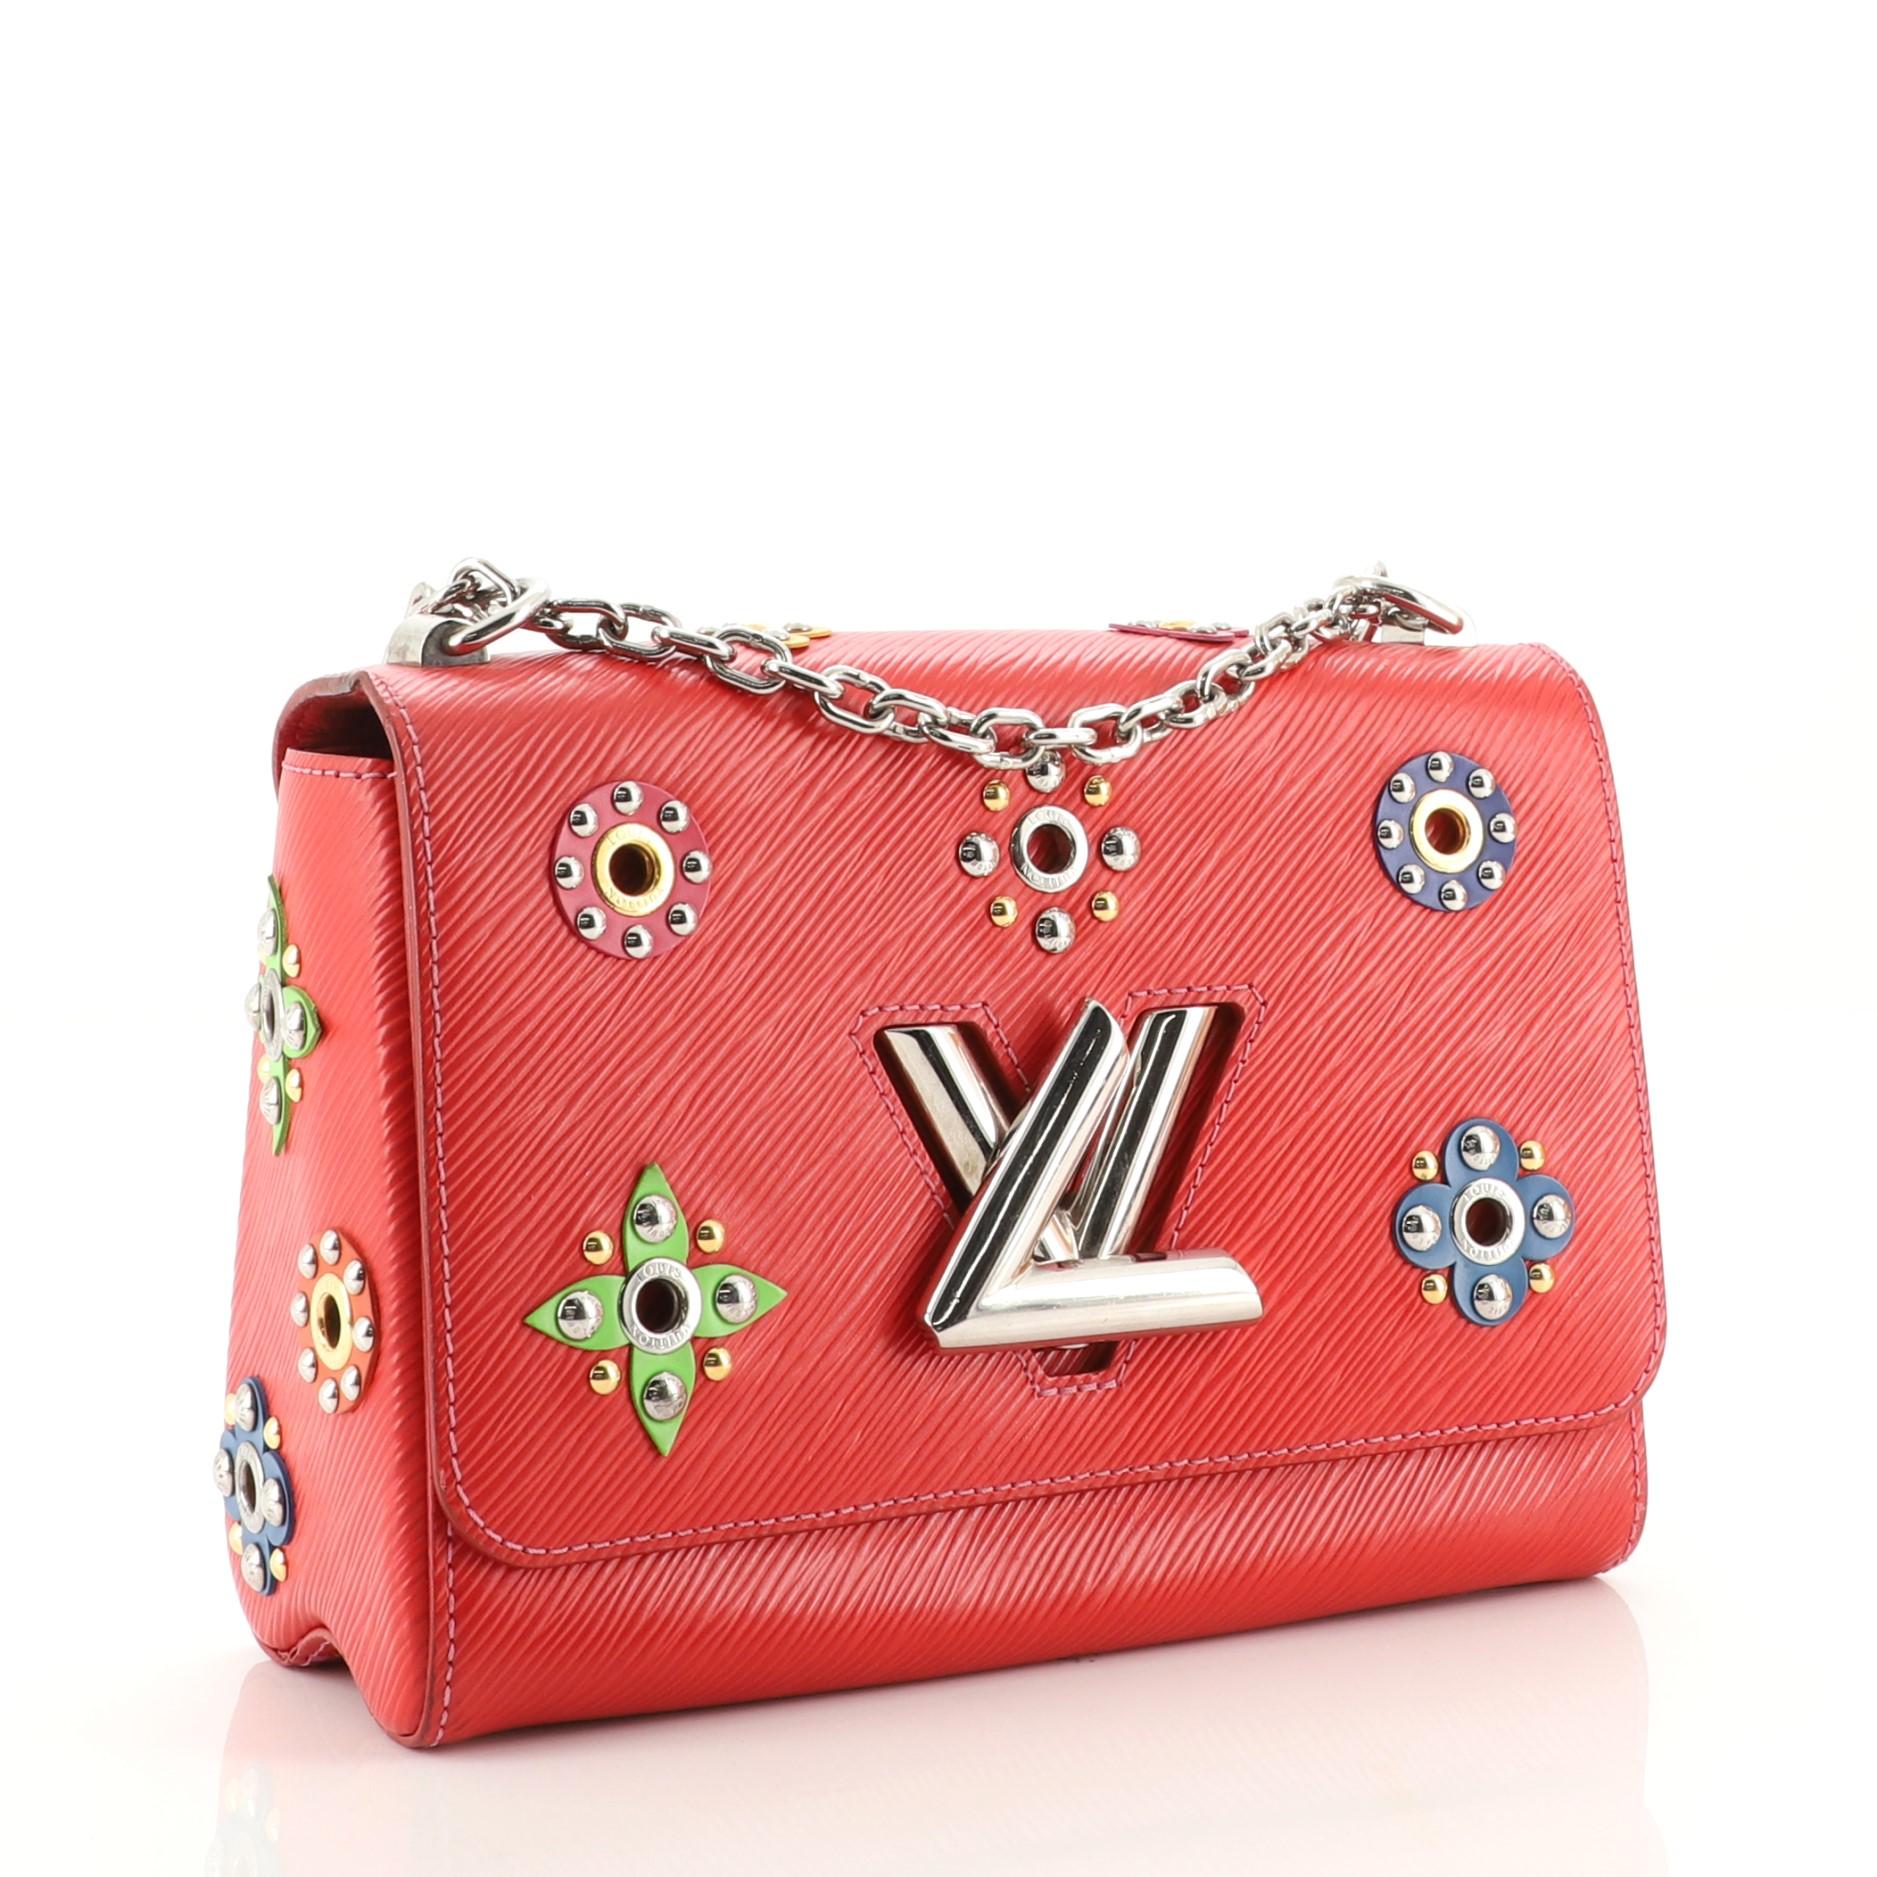 125007 36 Louis Vuitton Twist Handbag Limited Edit 2D 0004 master